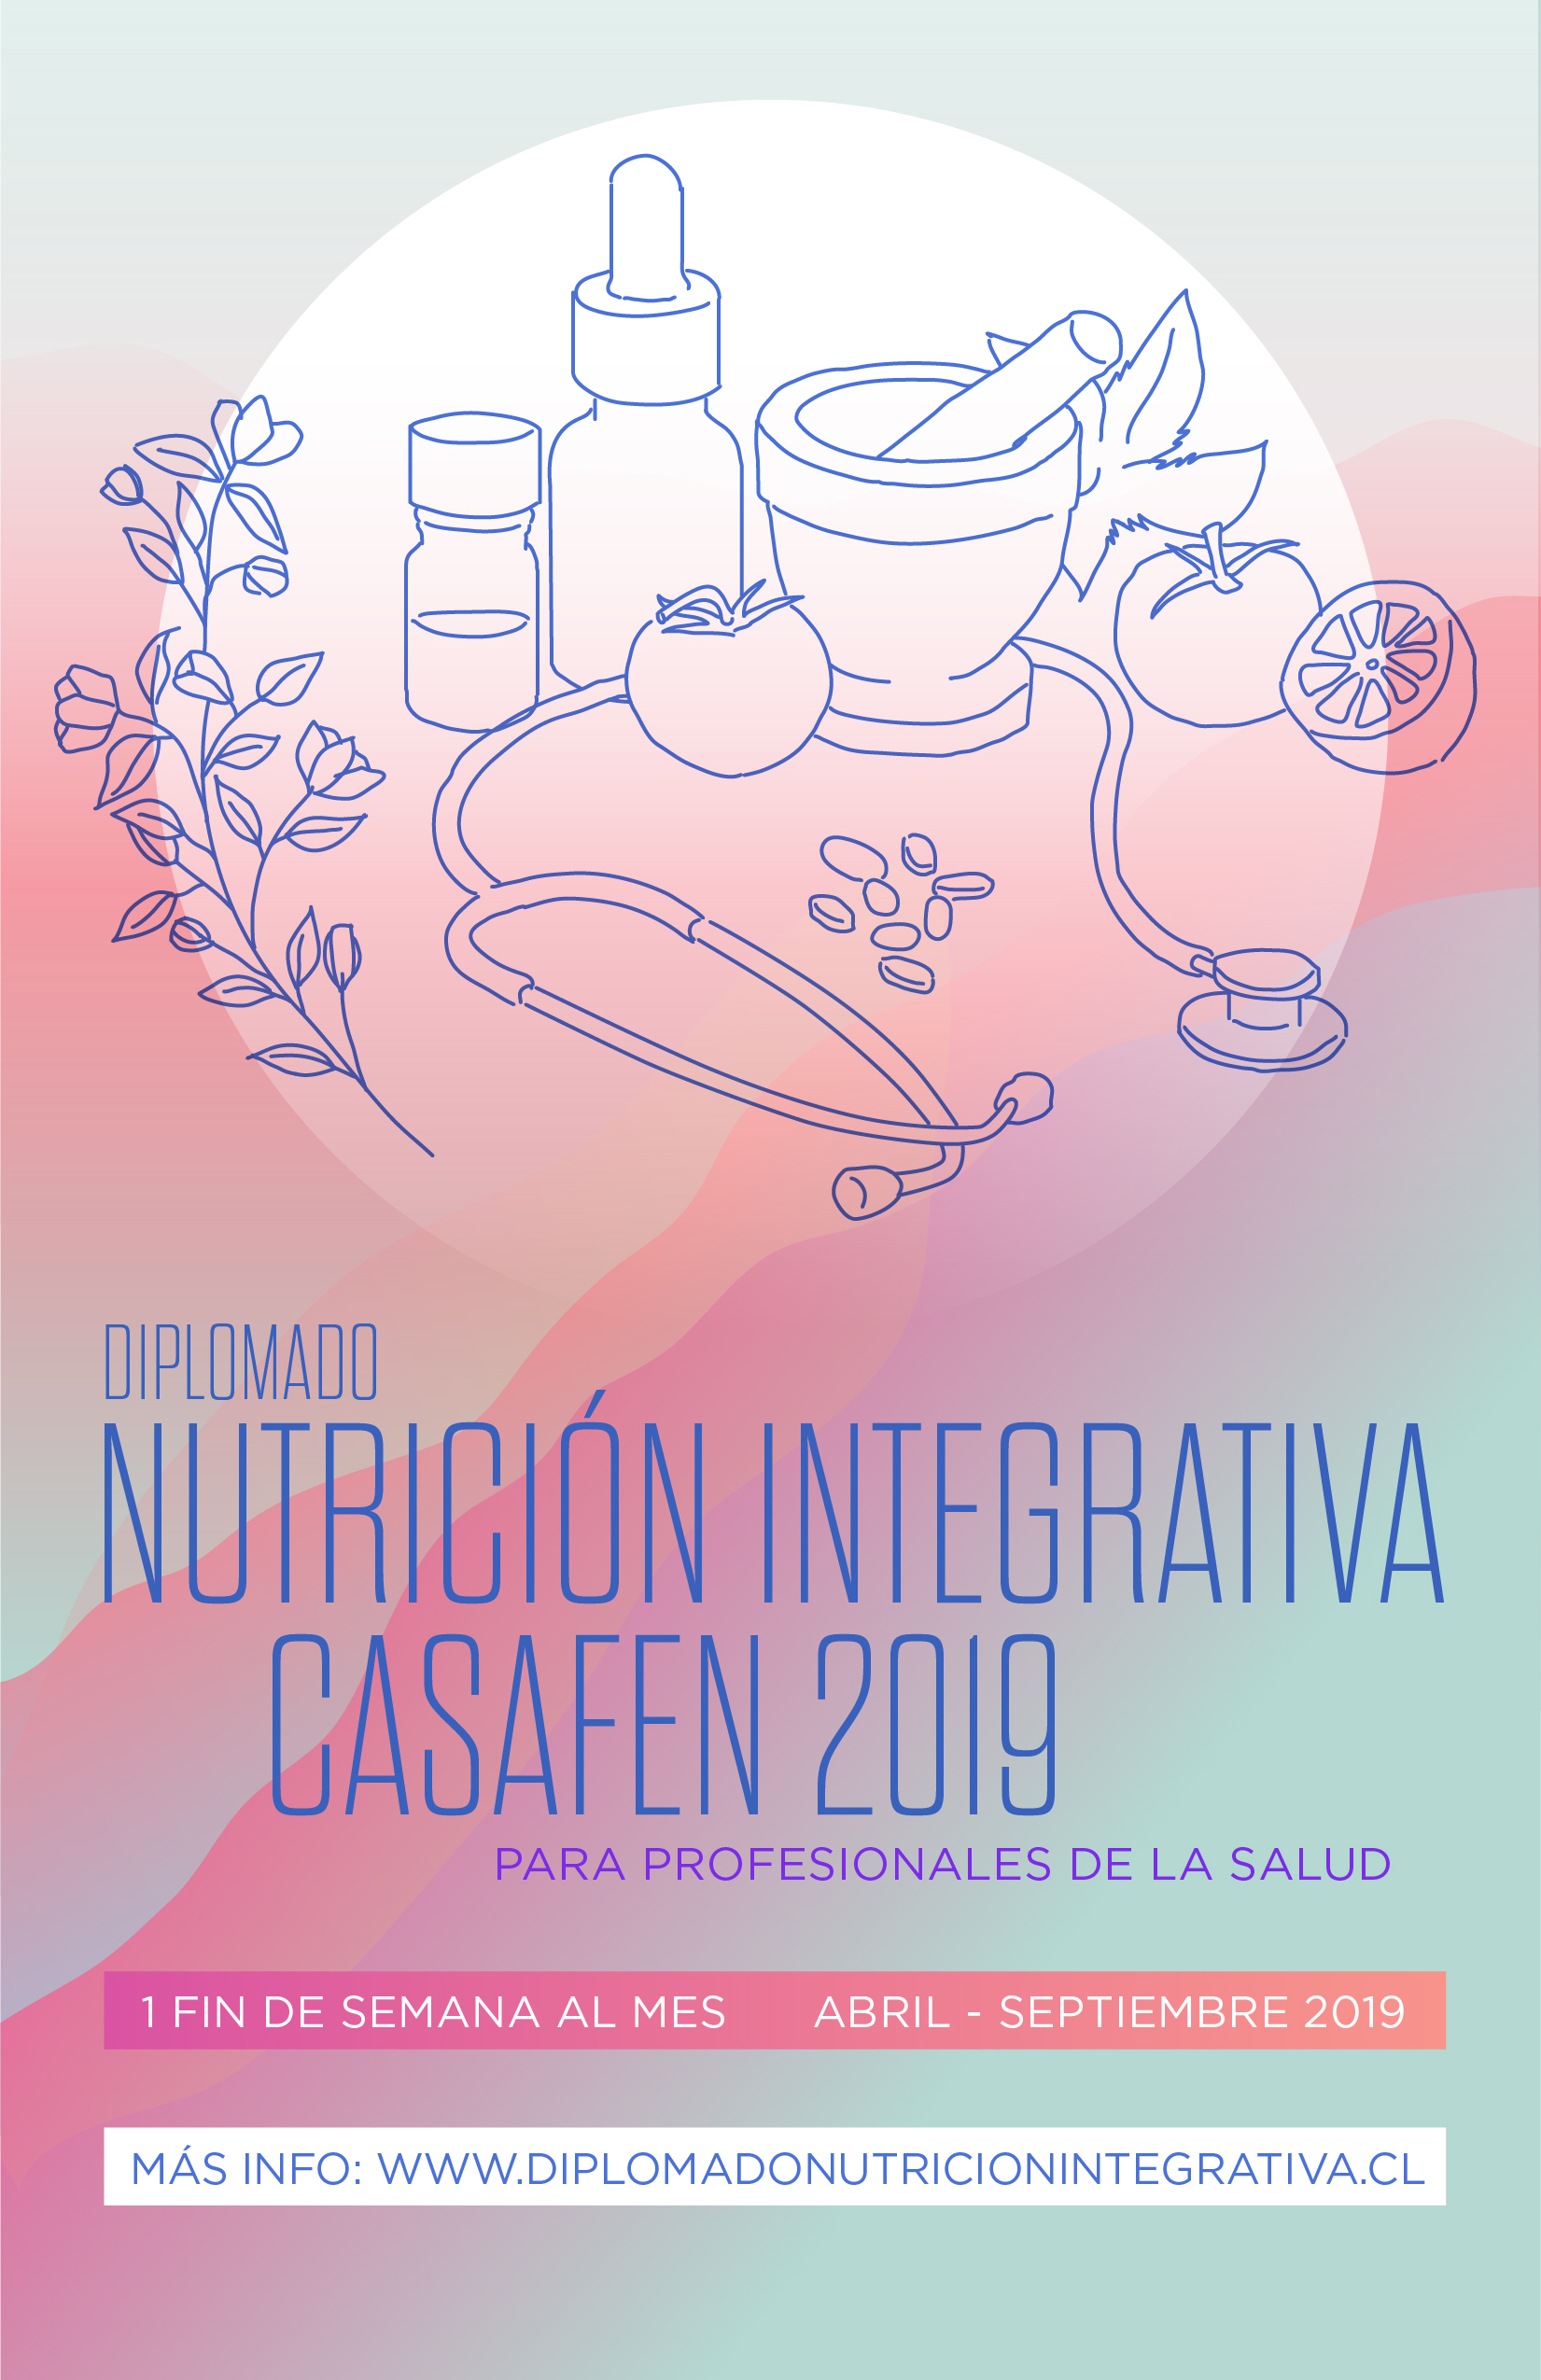 Diplomado Nutricion Integrativa CasaFen 2019